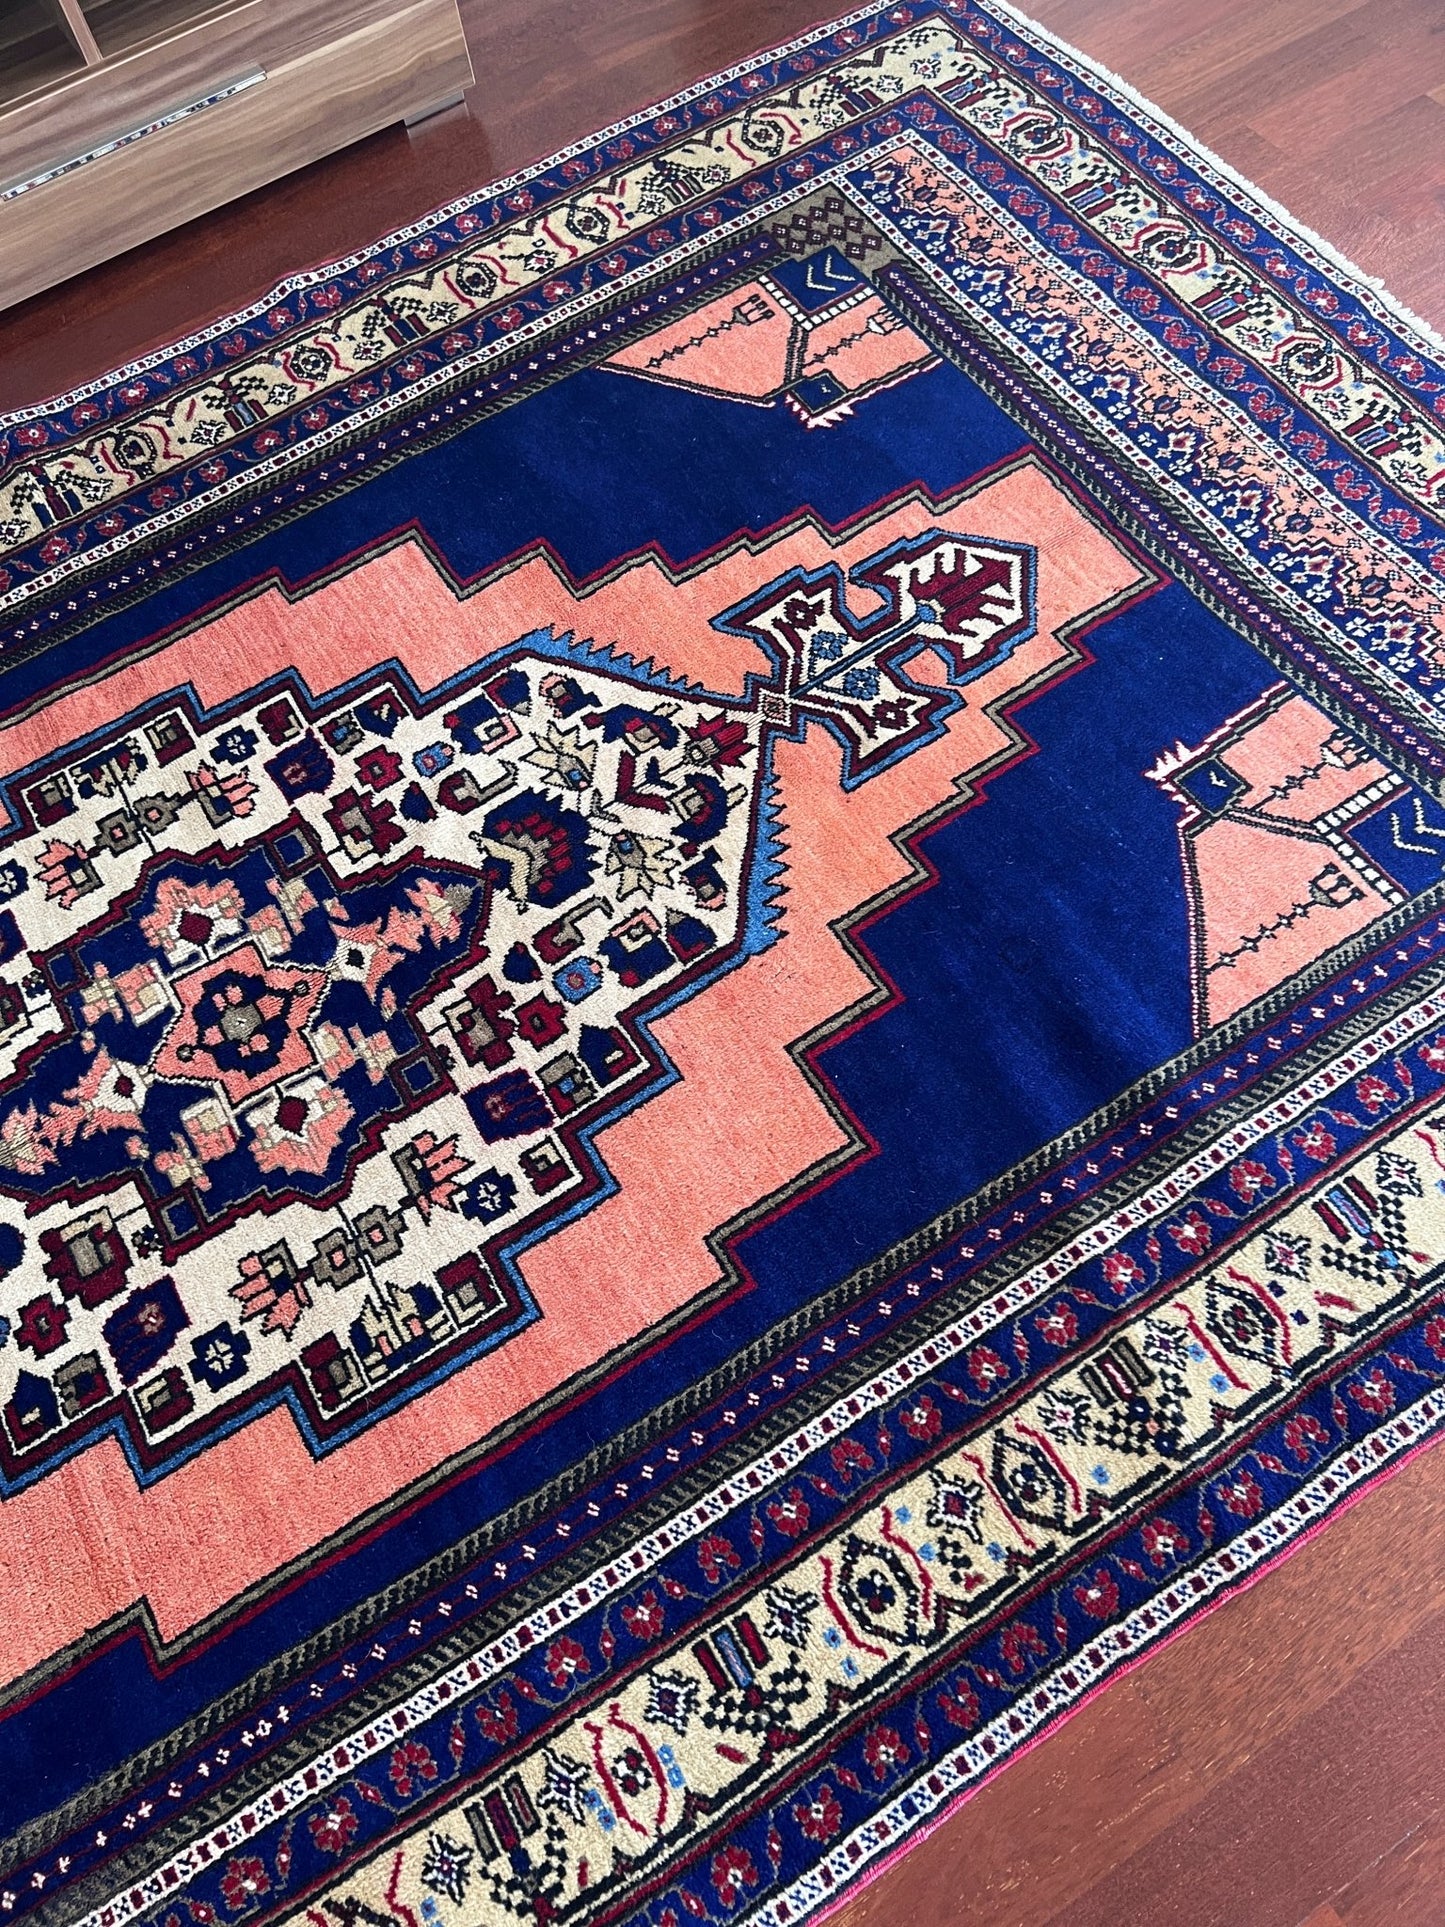 taspinar wool handmade vintage turkish rug shop san francisco bay area. Oriental rug shop palo alto berkeley rug shopping